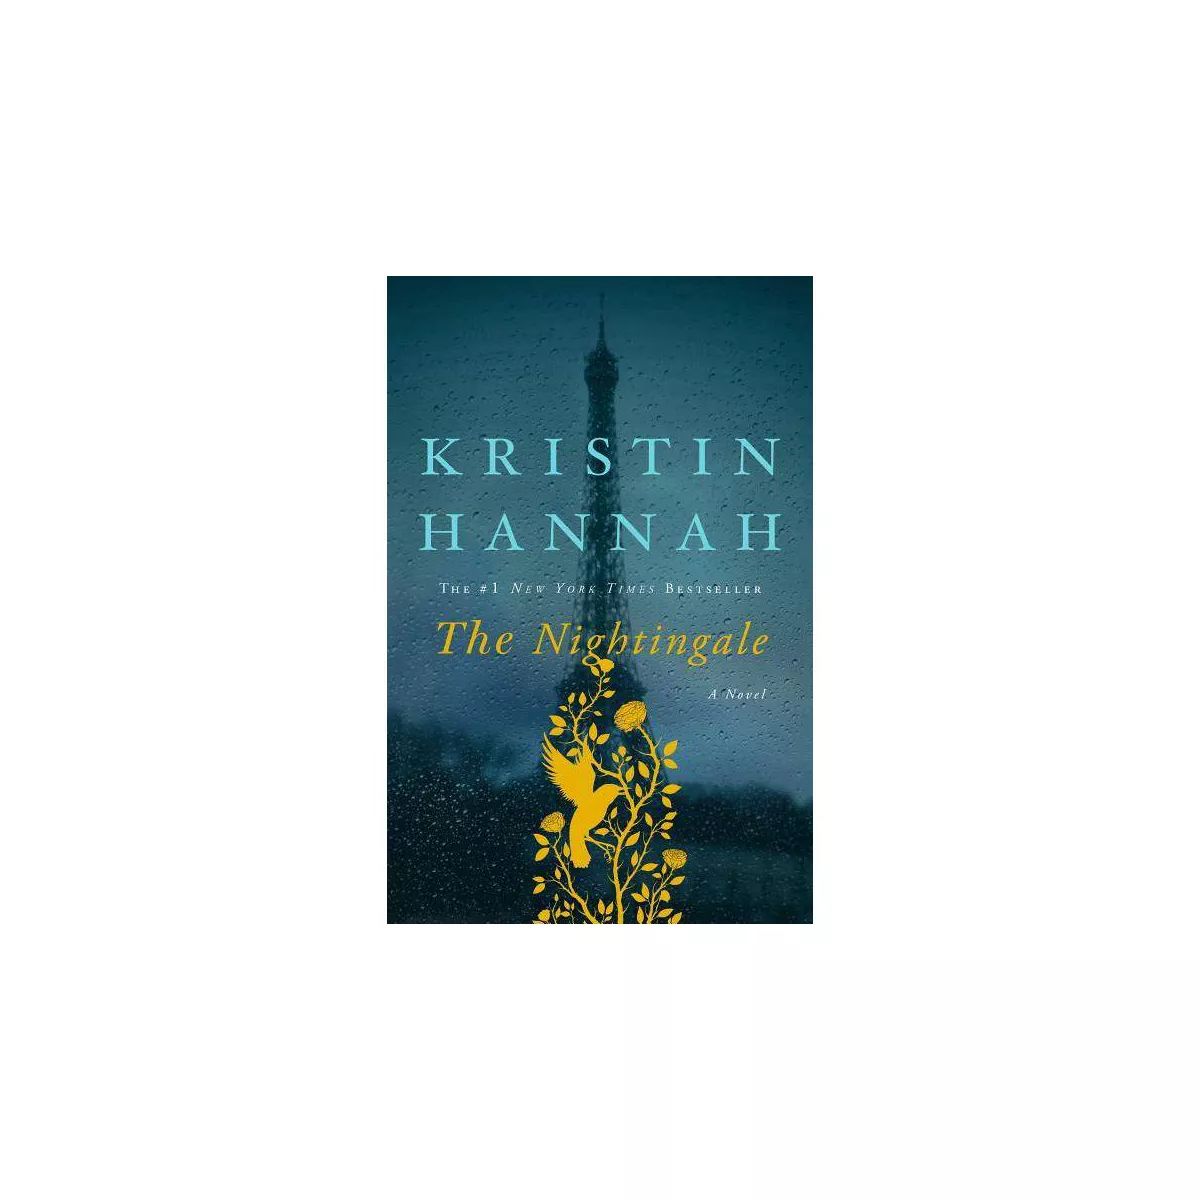 The Nightingale by Kristin Hannah (Hardcover) by Kristin Hannah | Target